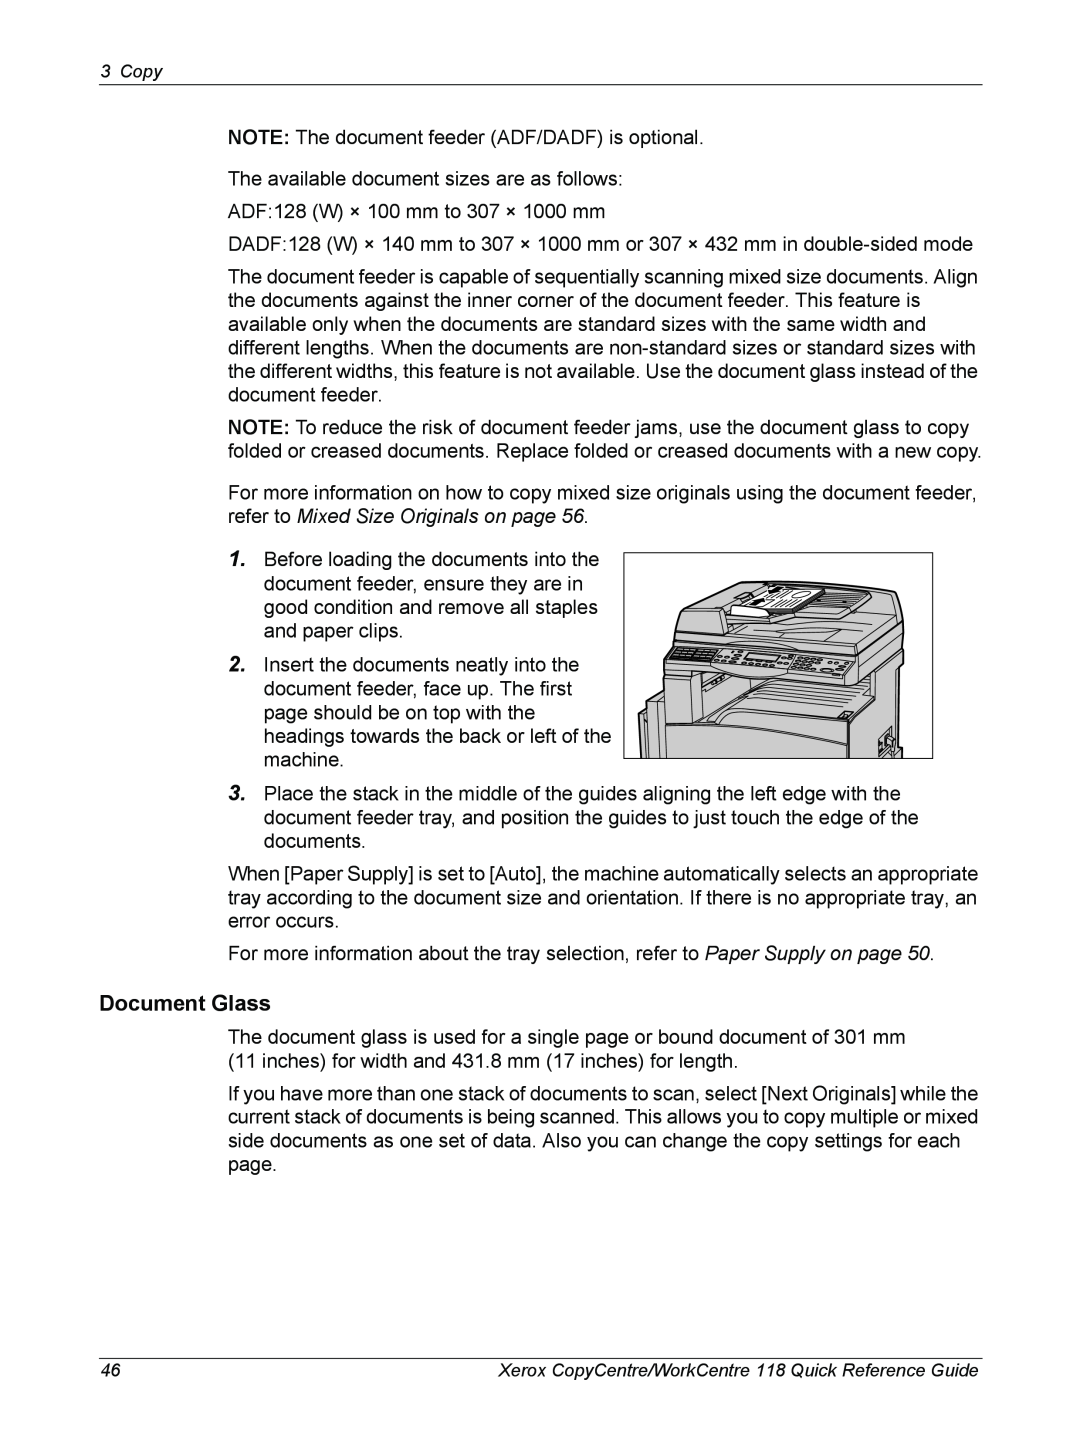 Xerox M118i, C118 manual Document Glass 